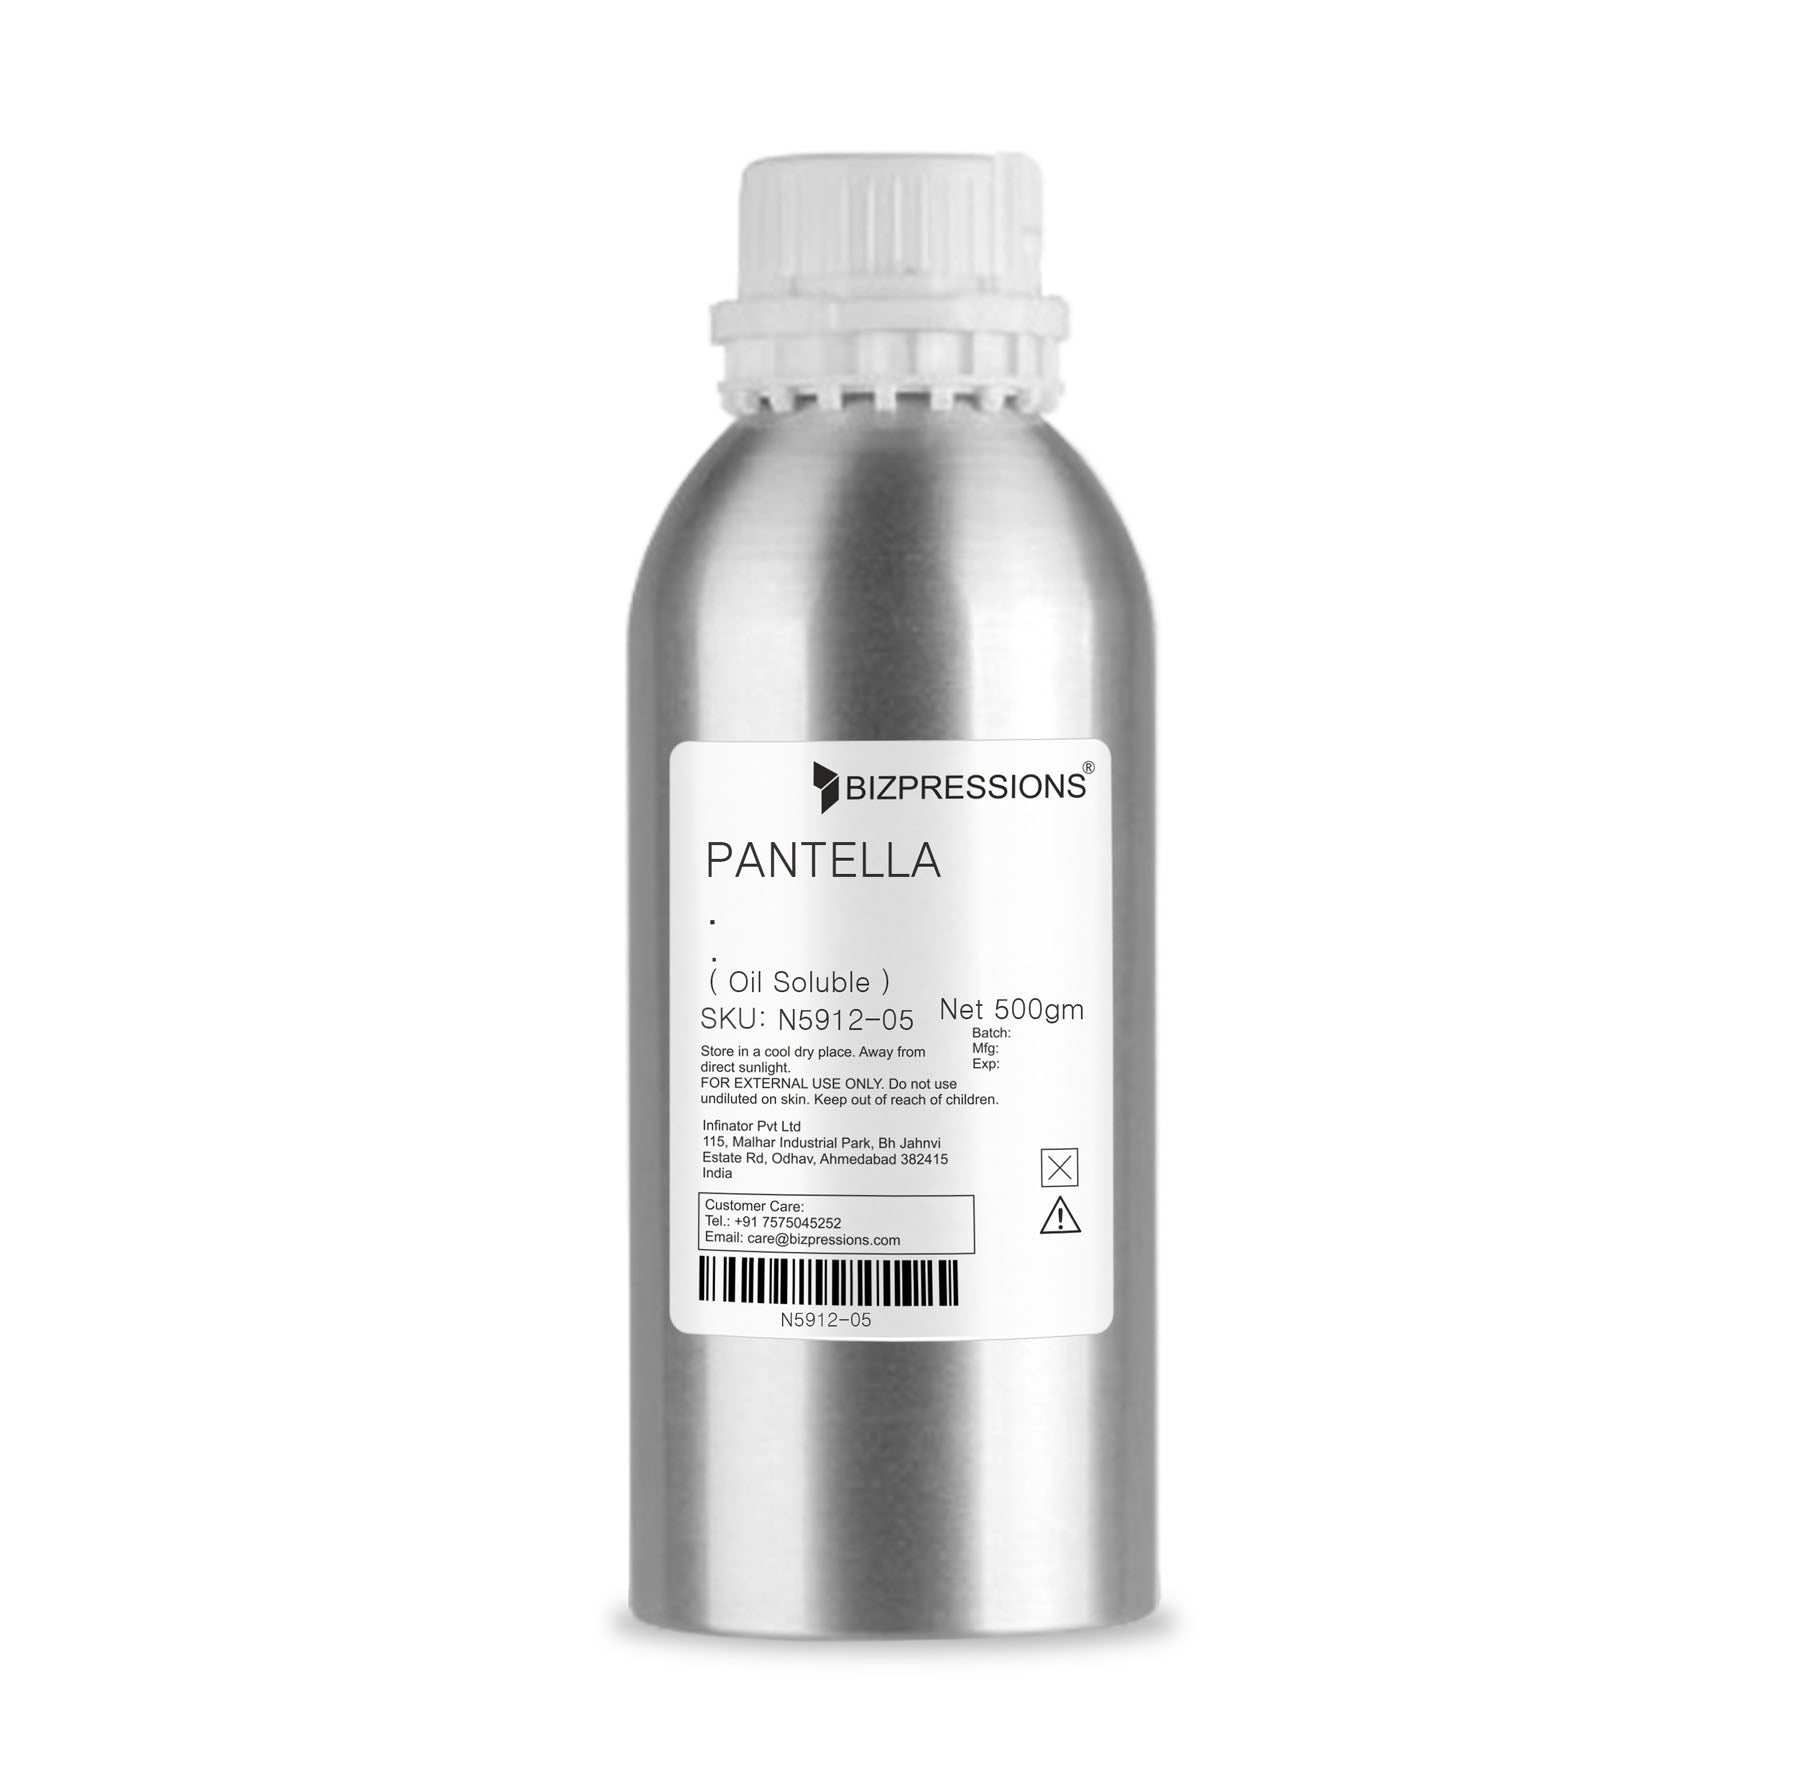 PANTELLA - Fragrance ( Oil Soluble ) - 500 gm